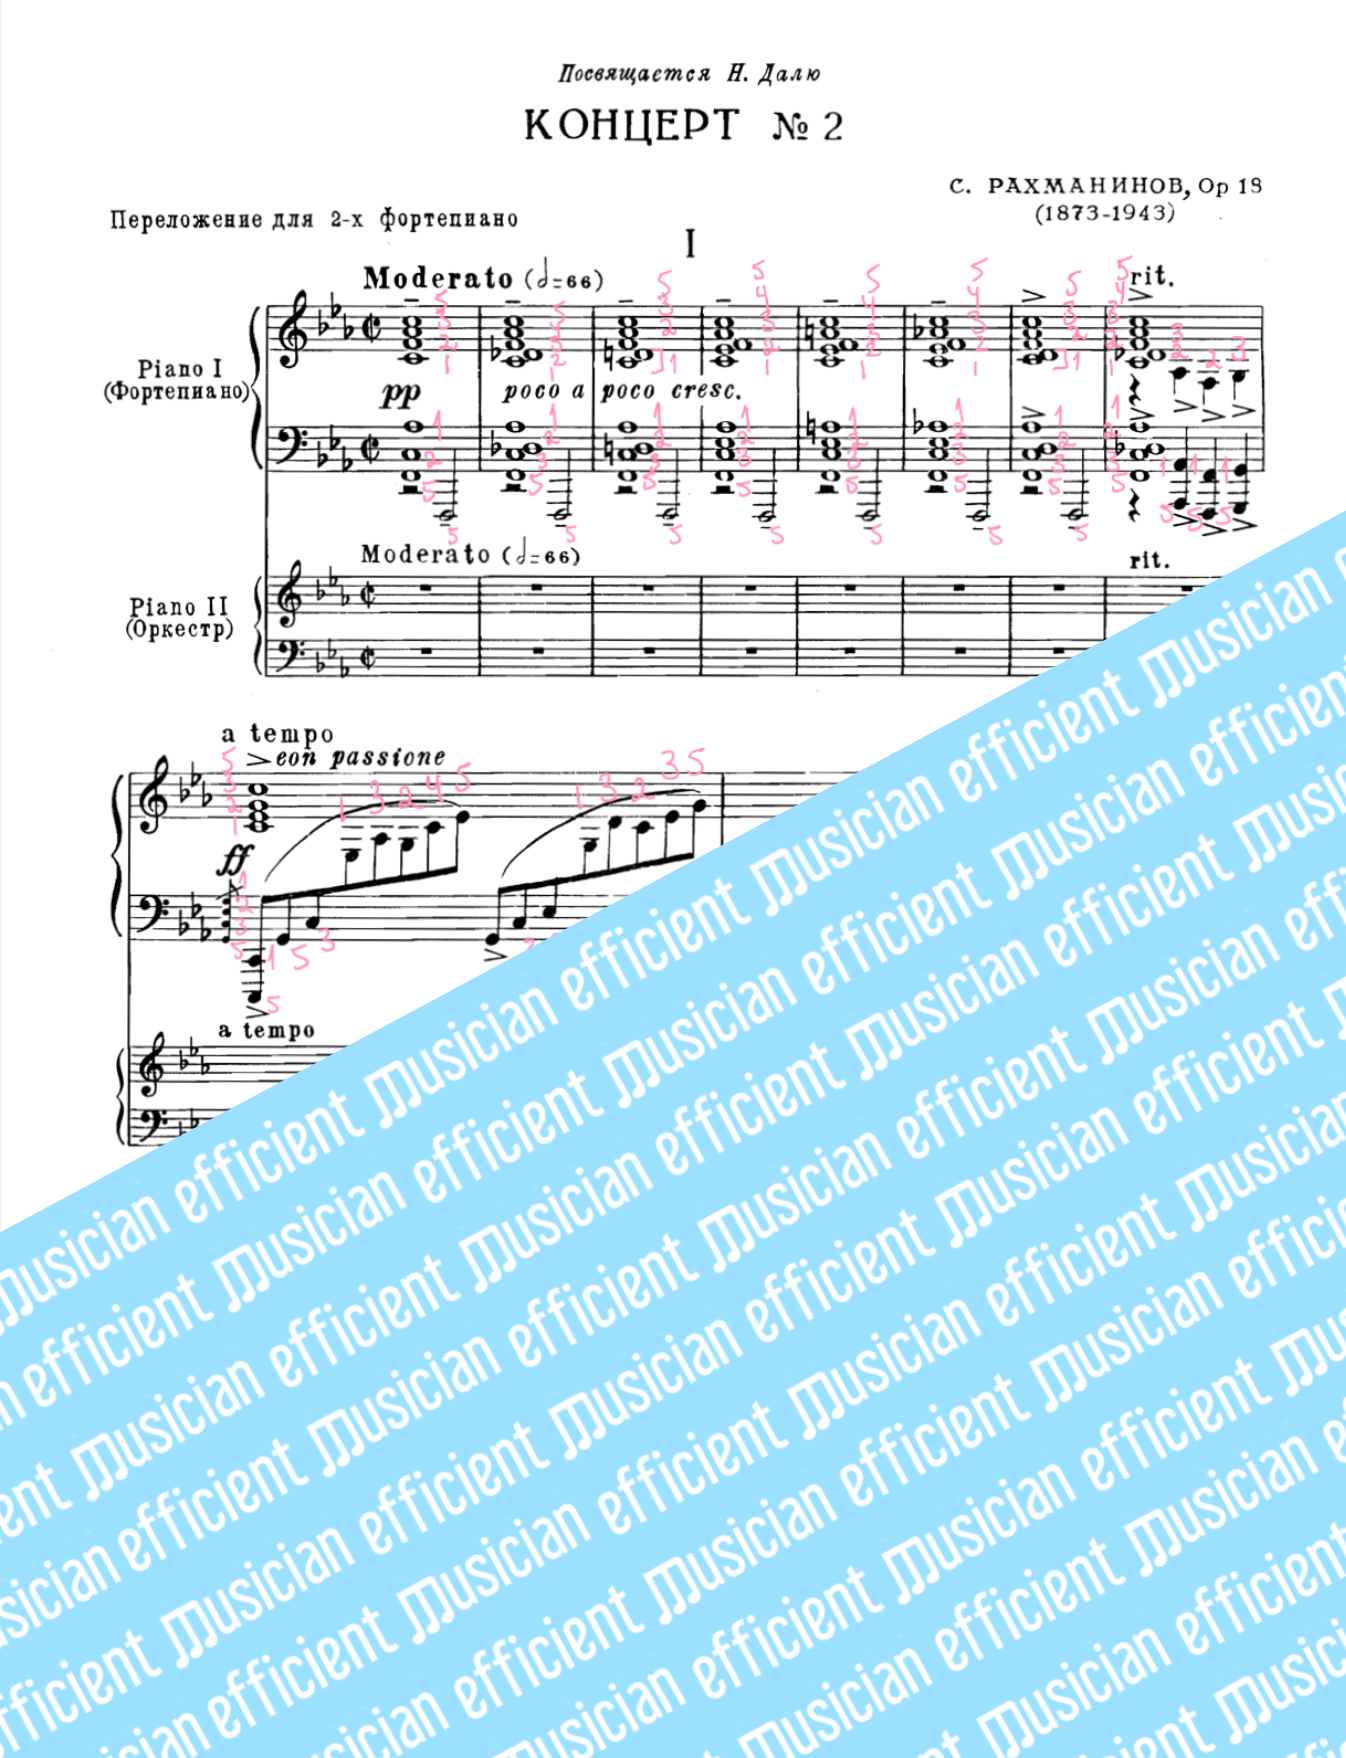 Rachmaninoff, Piano Concerto No. 2 in C Minor, Op. 18 - COMPLETE FINGERINGS